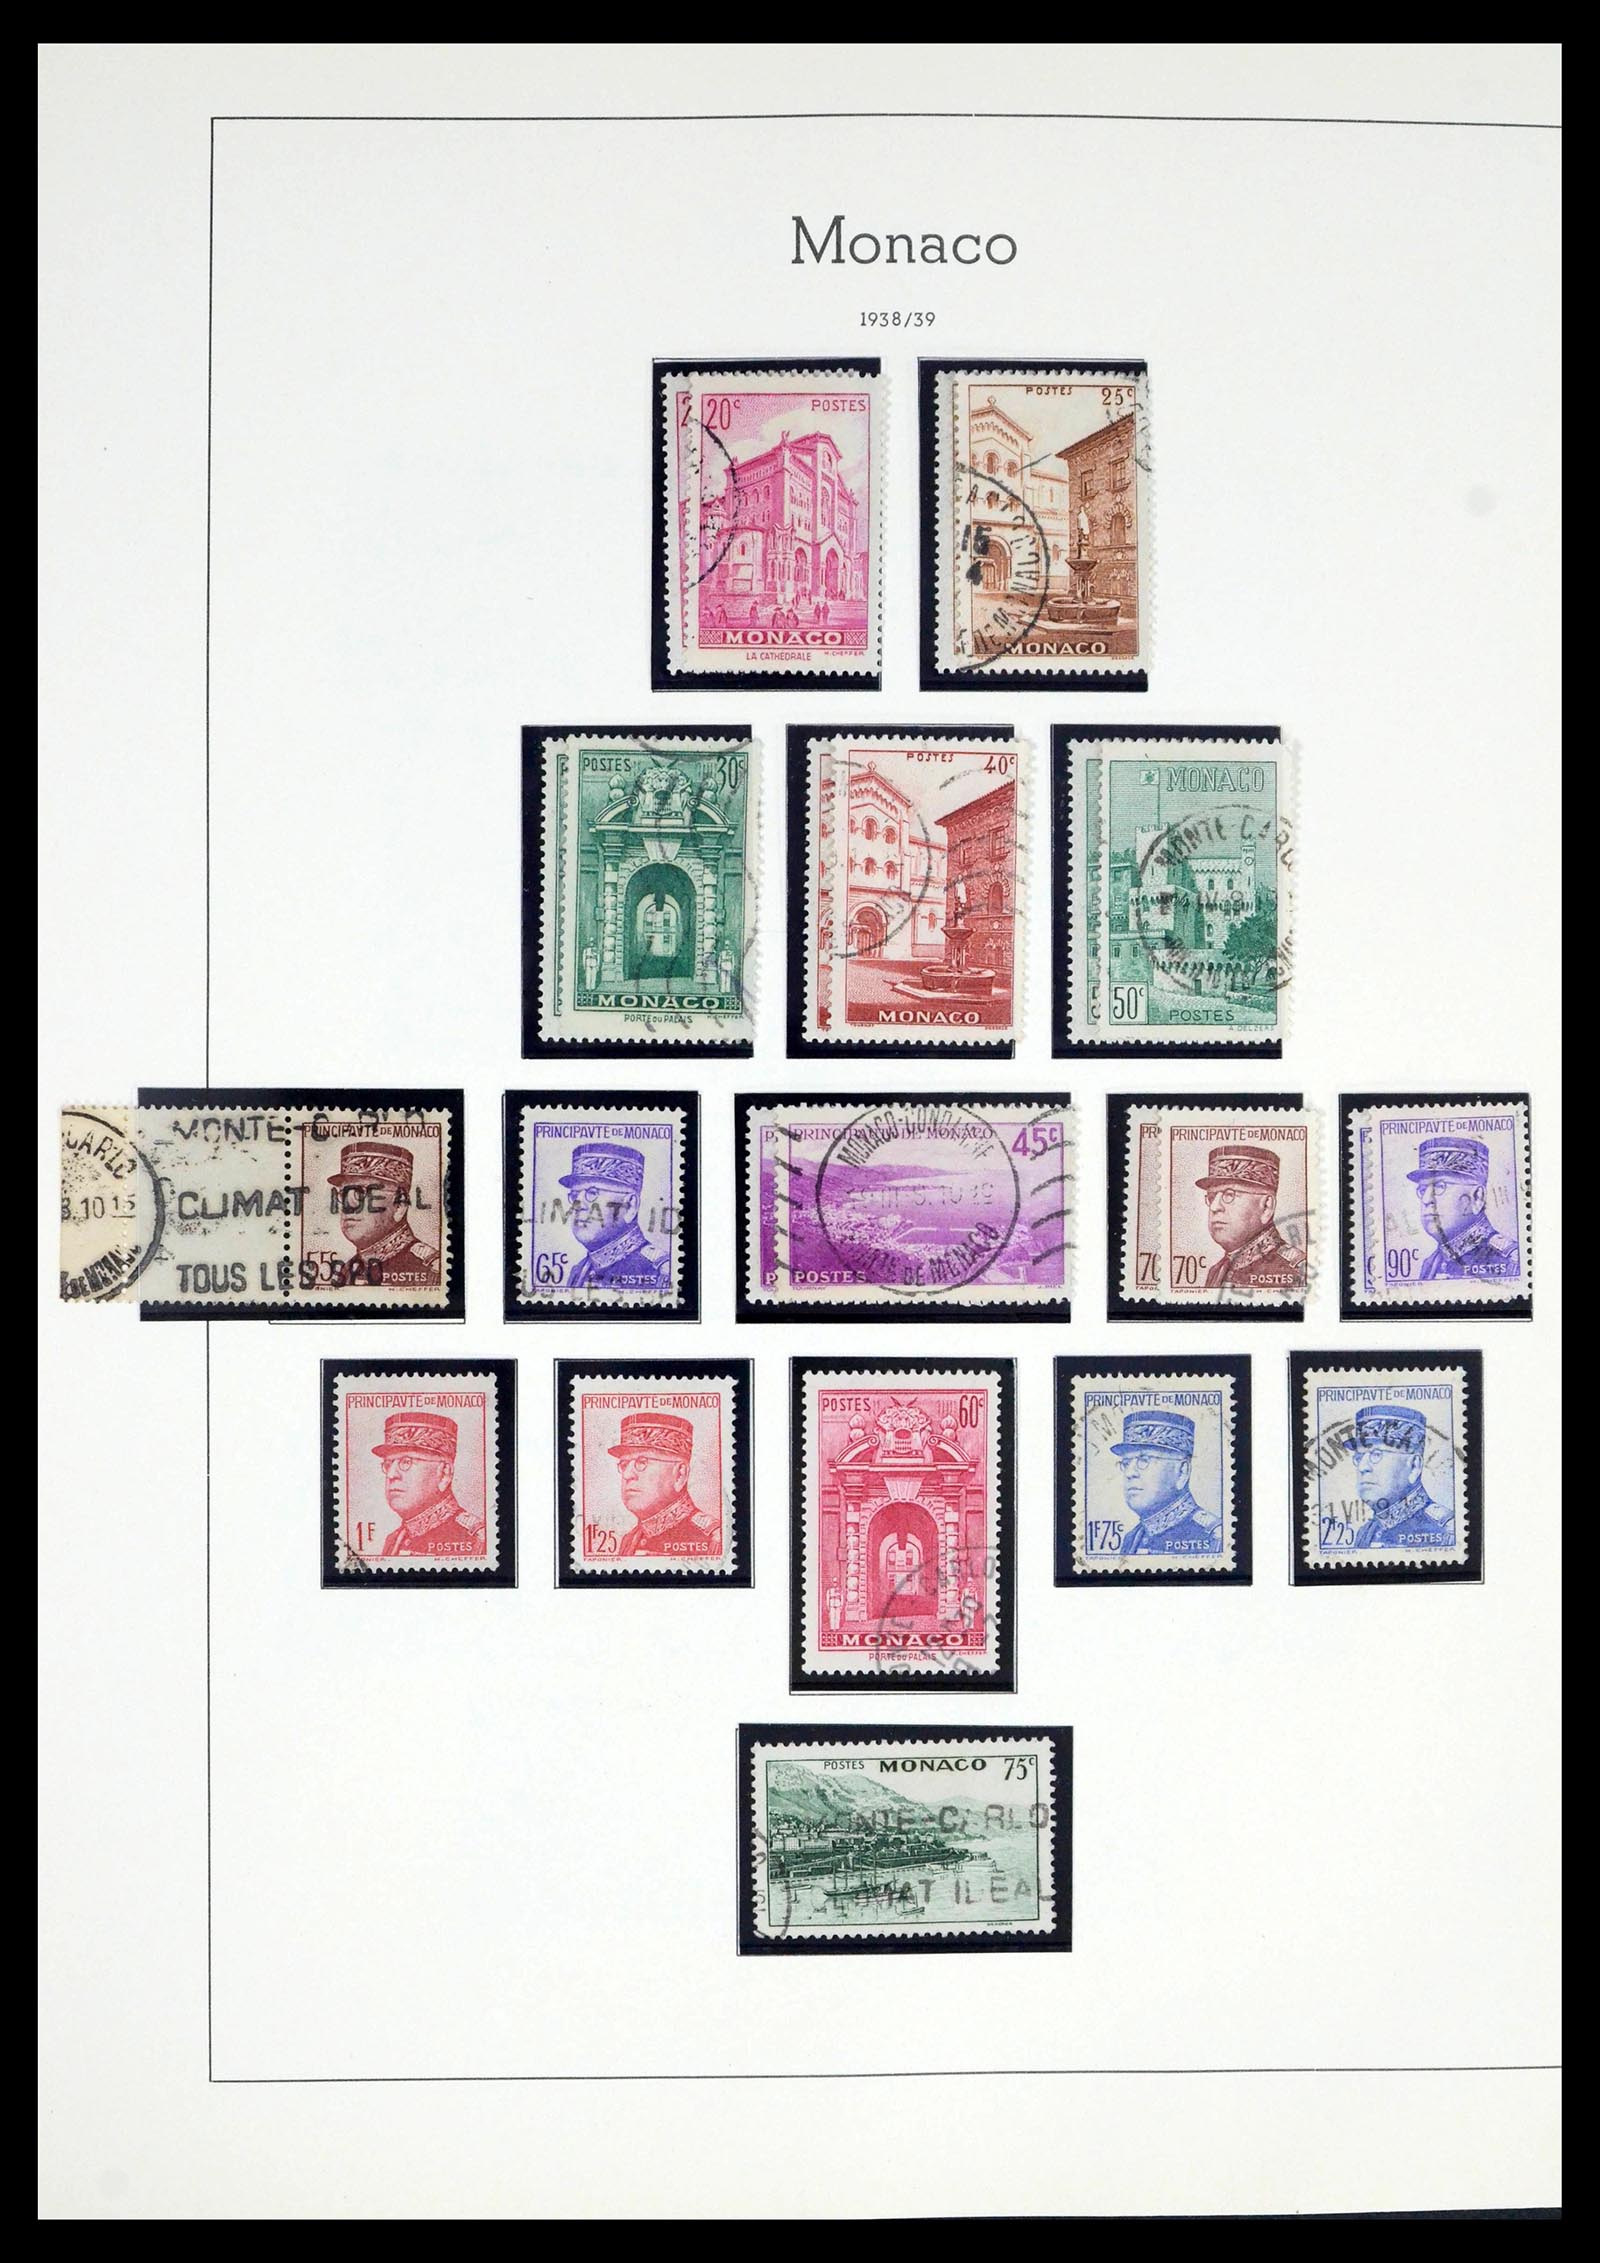 39392 0013 - Stamp collection 39392 Monaco 1885-1999.